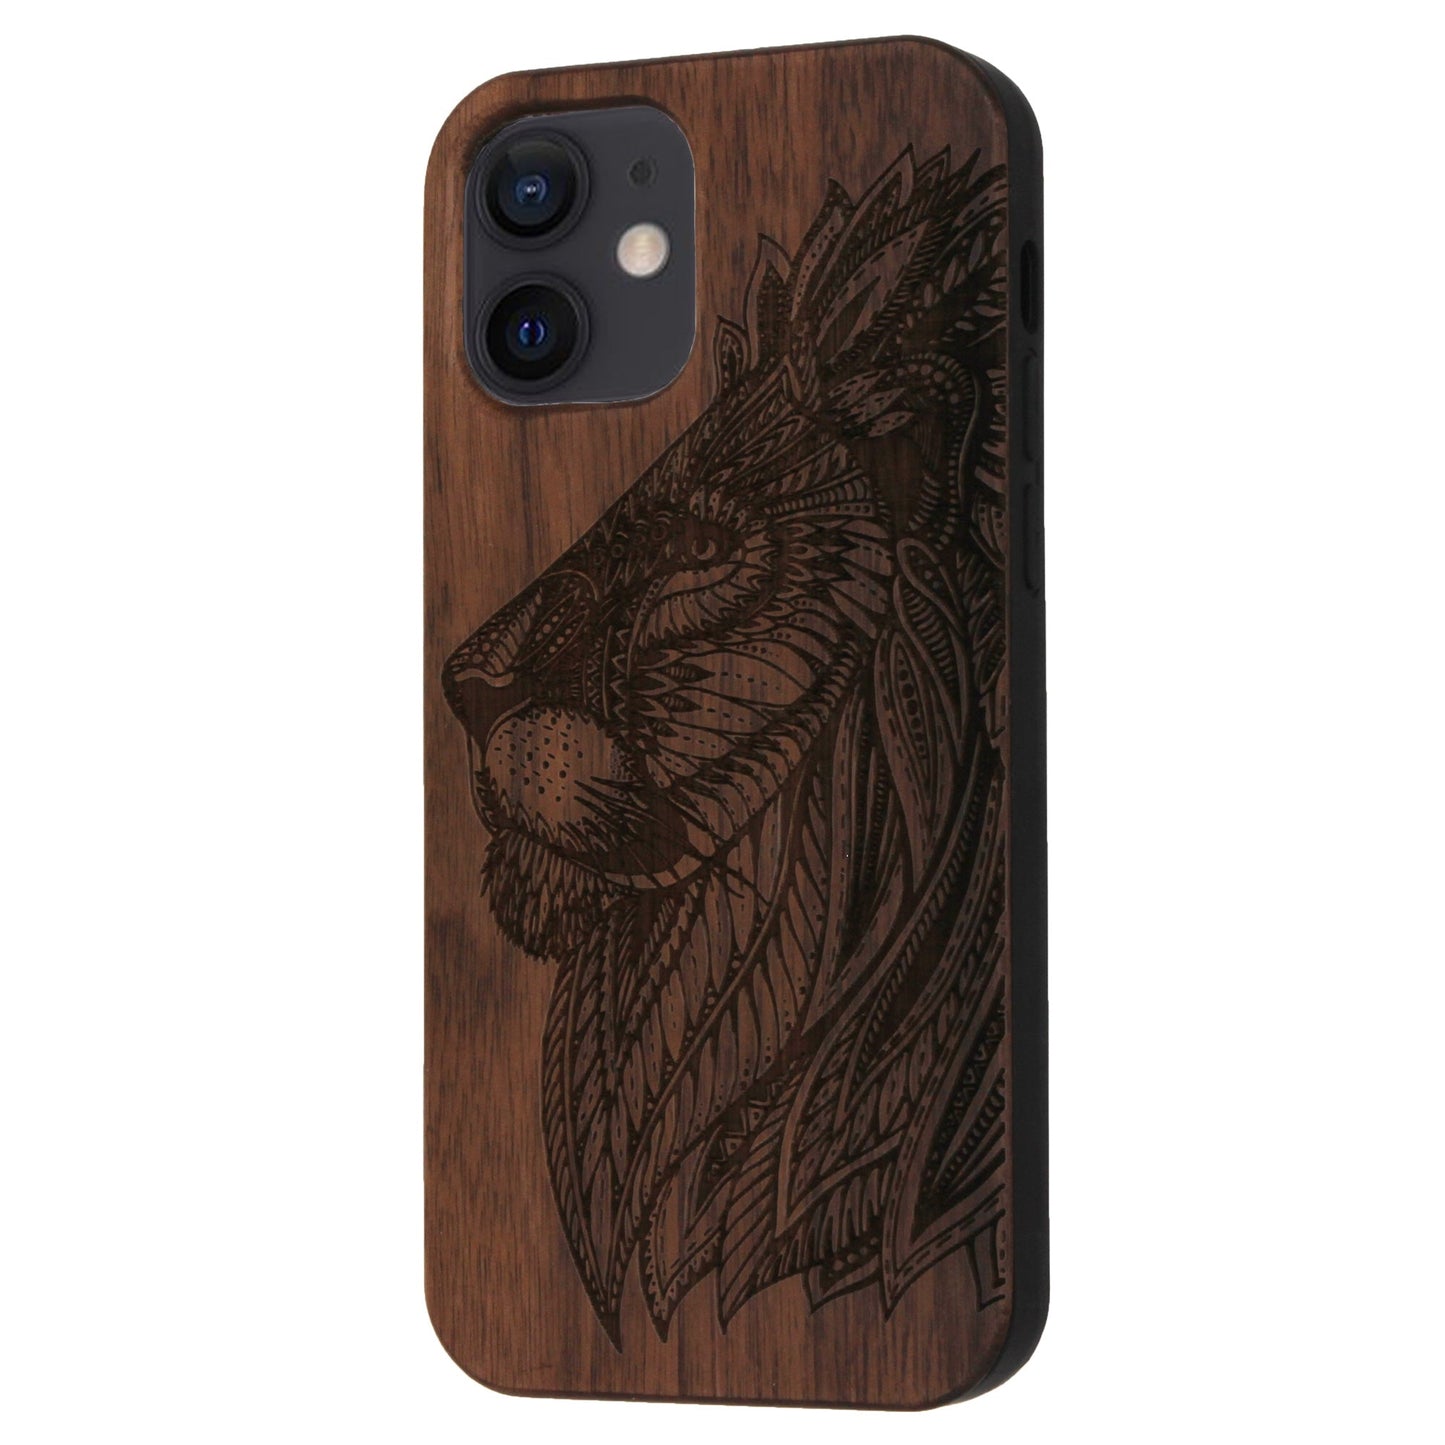 Walnut lion Eden case for iPhone 12 Mini